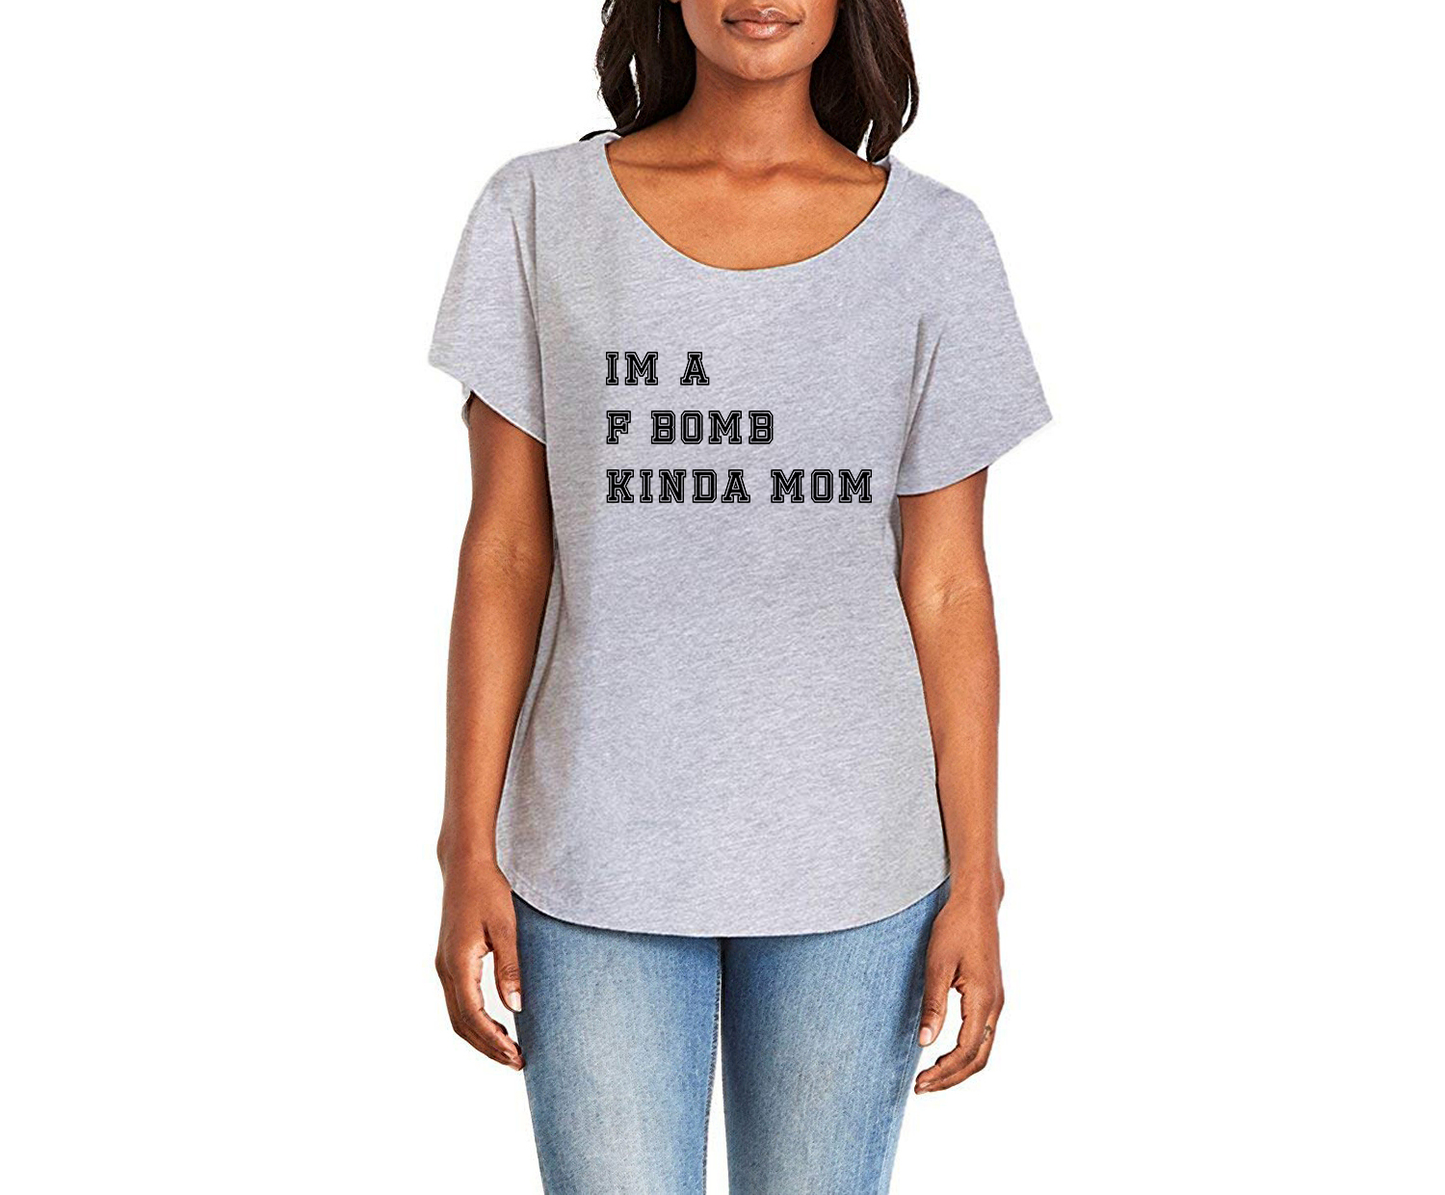 Im A F Bomb Kinda Mom Ladies Tee Shirt - In Grey & White